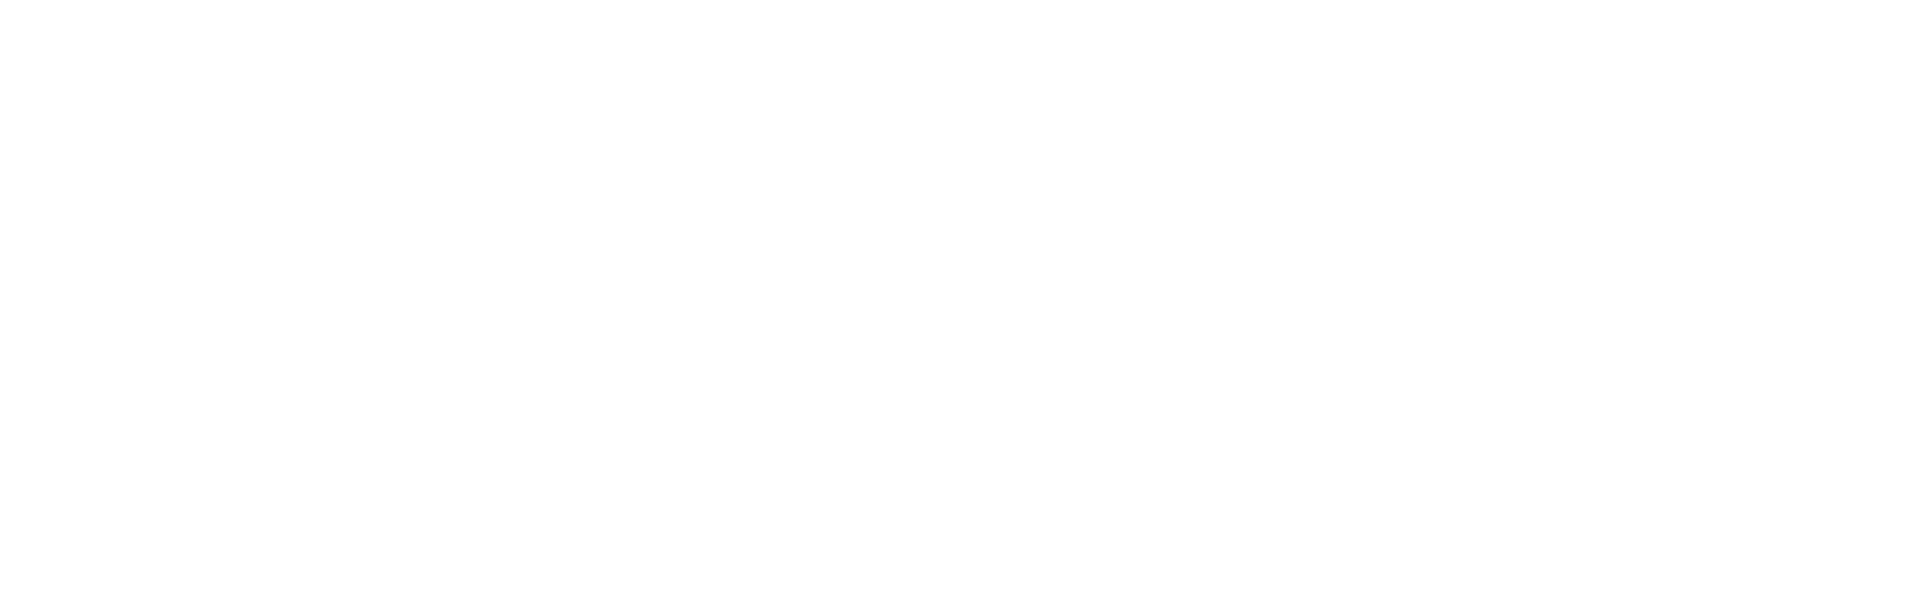 Lauren Wittig Team and Luminate Home Loans logo